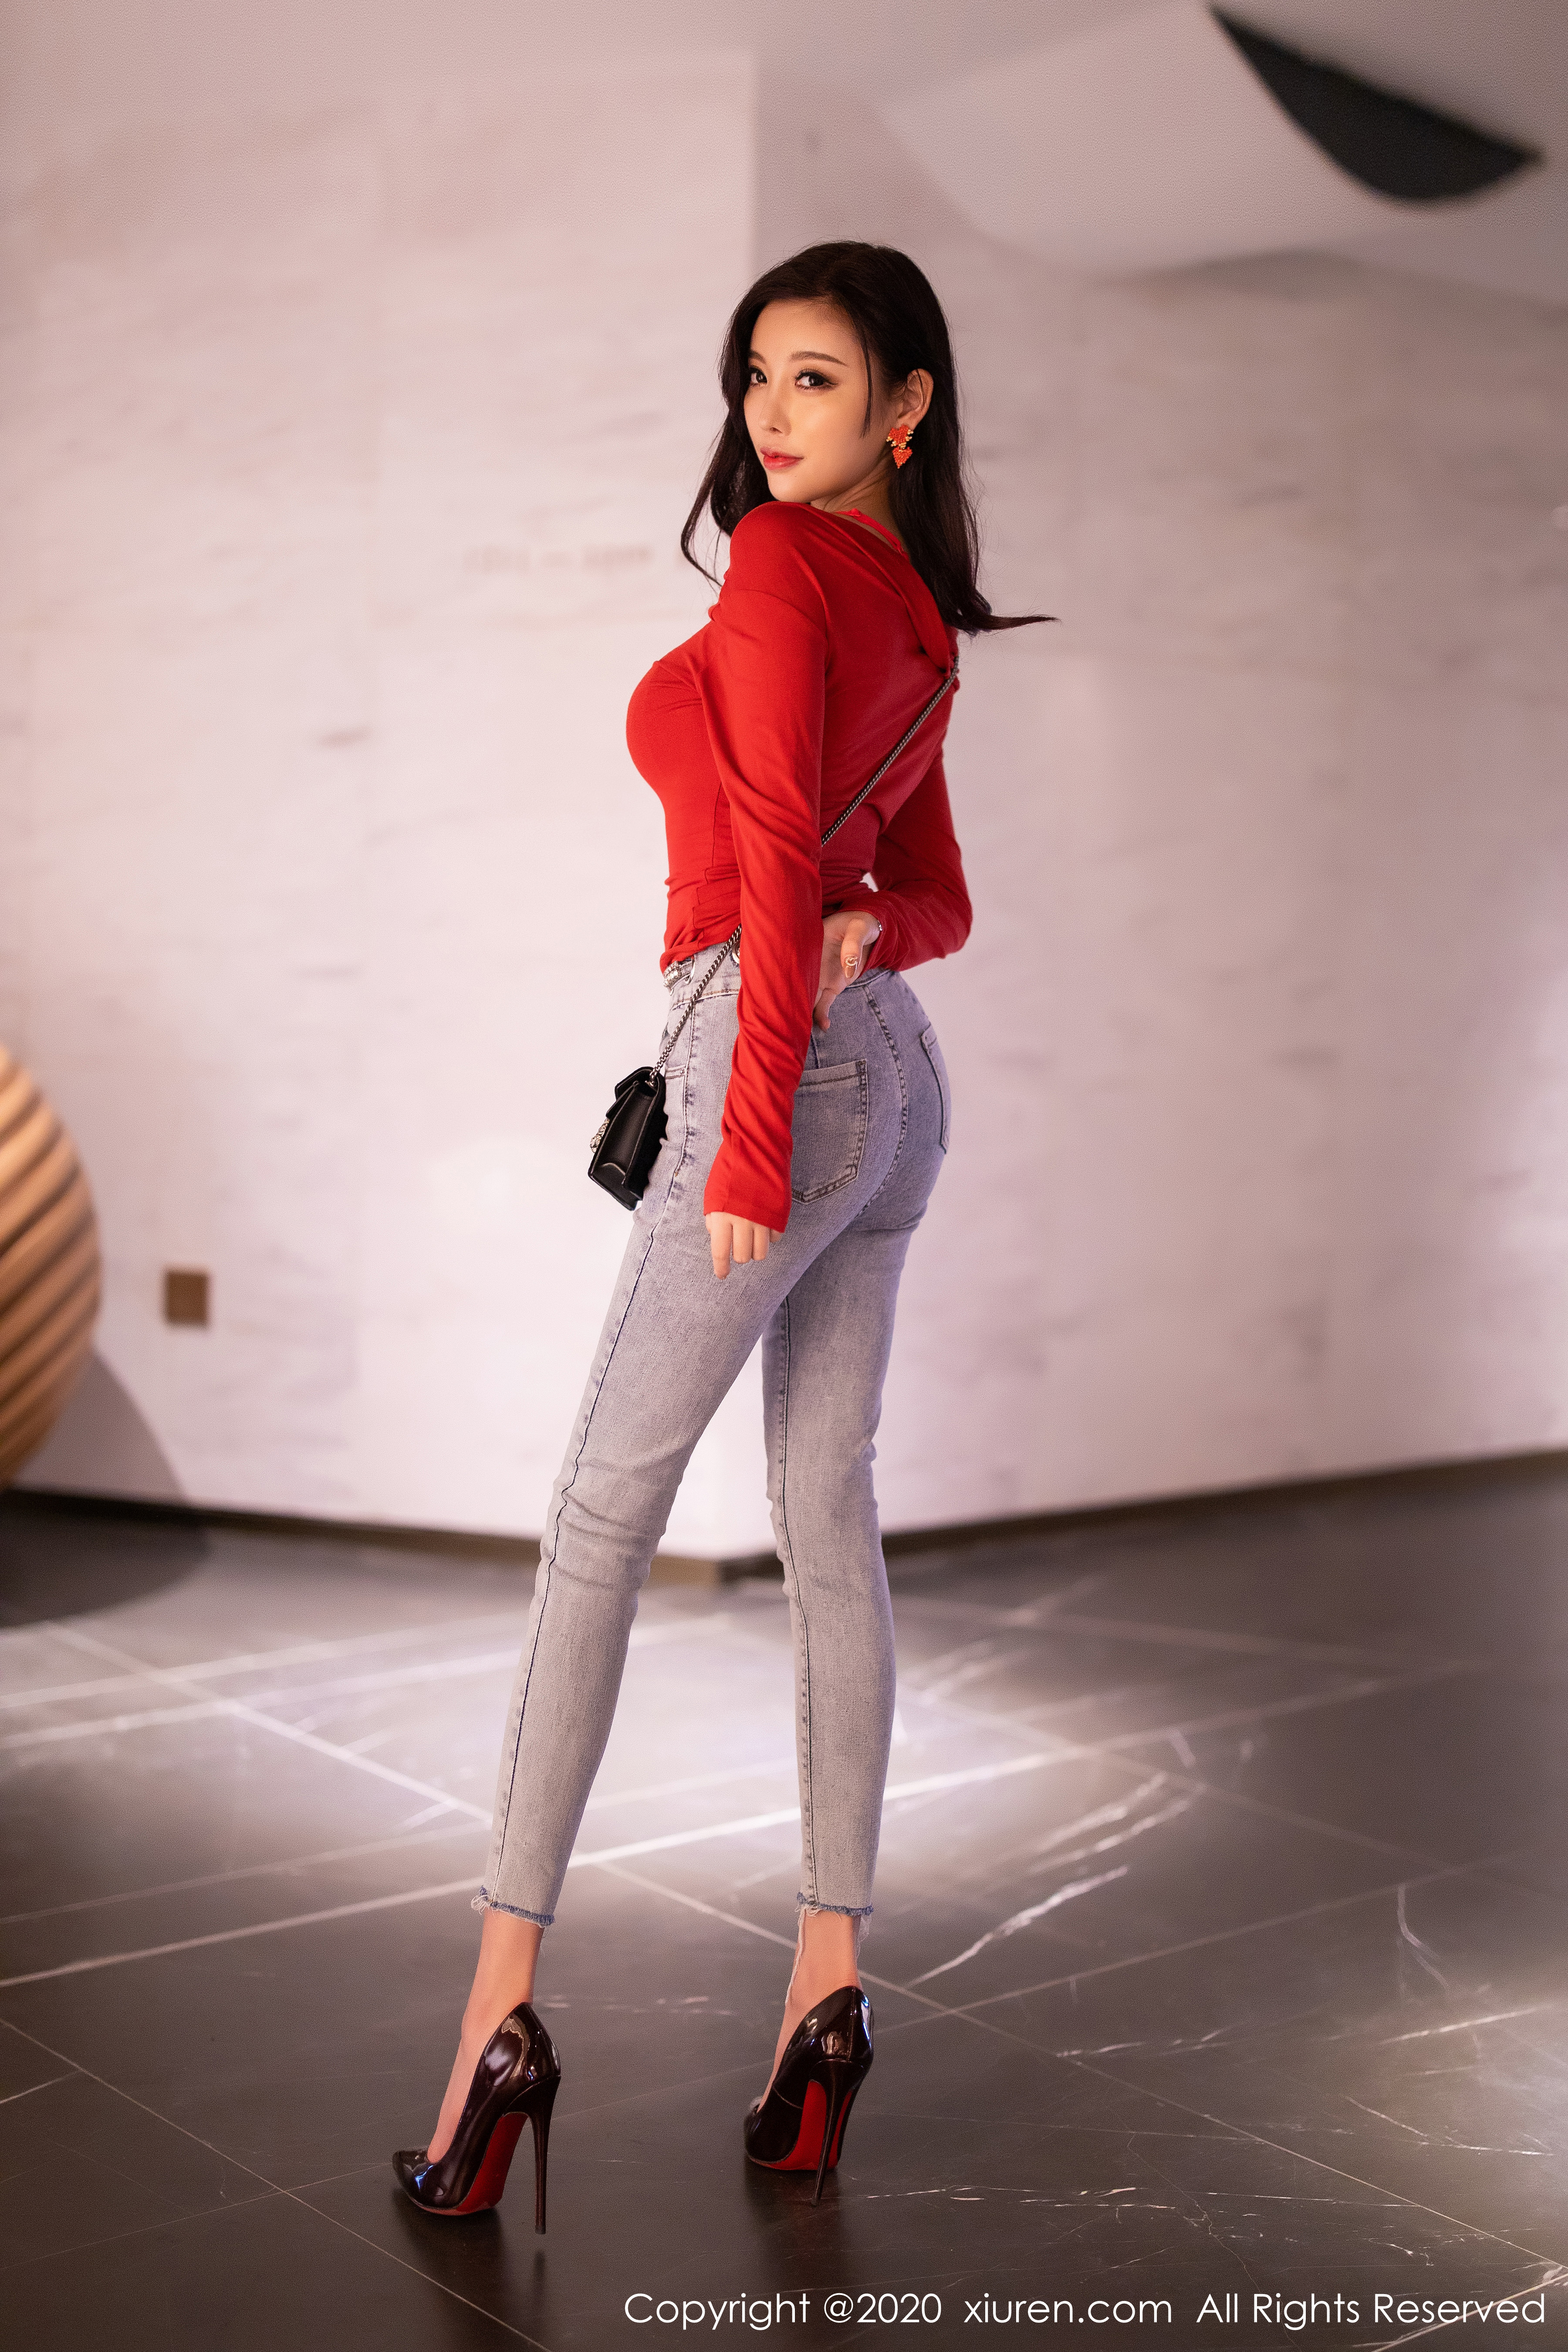 Chinese Model Asian High Heels Women 3600x5400